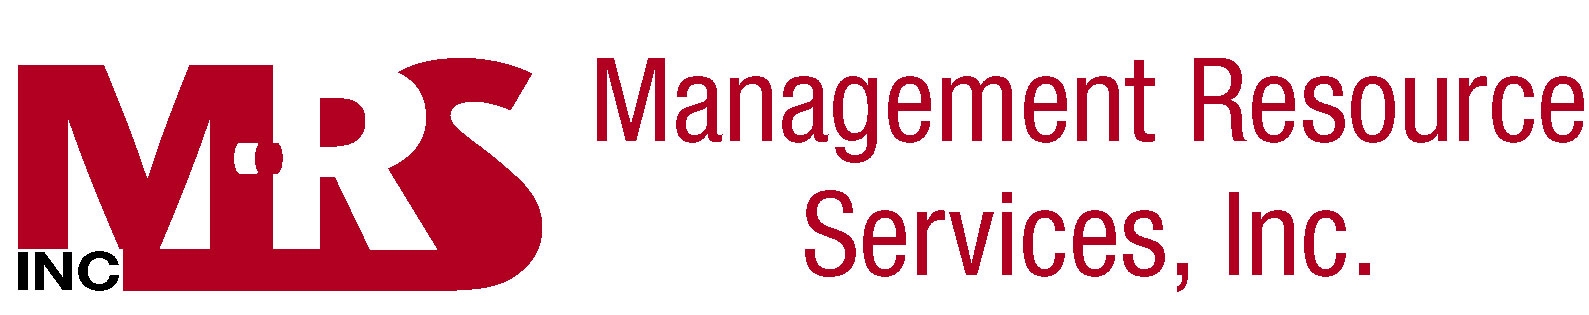 Management Resource Services, Inc.